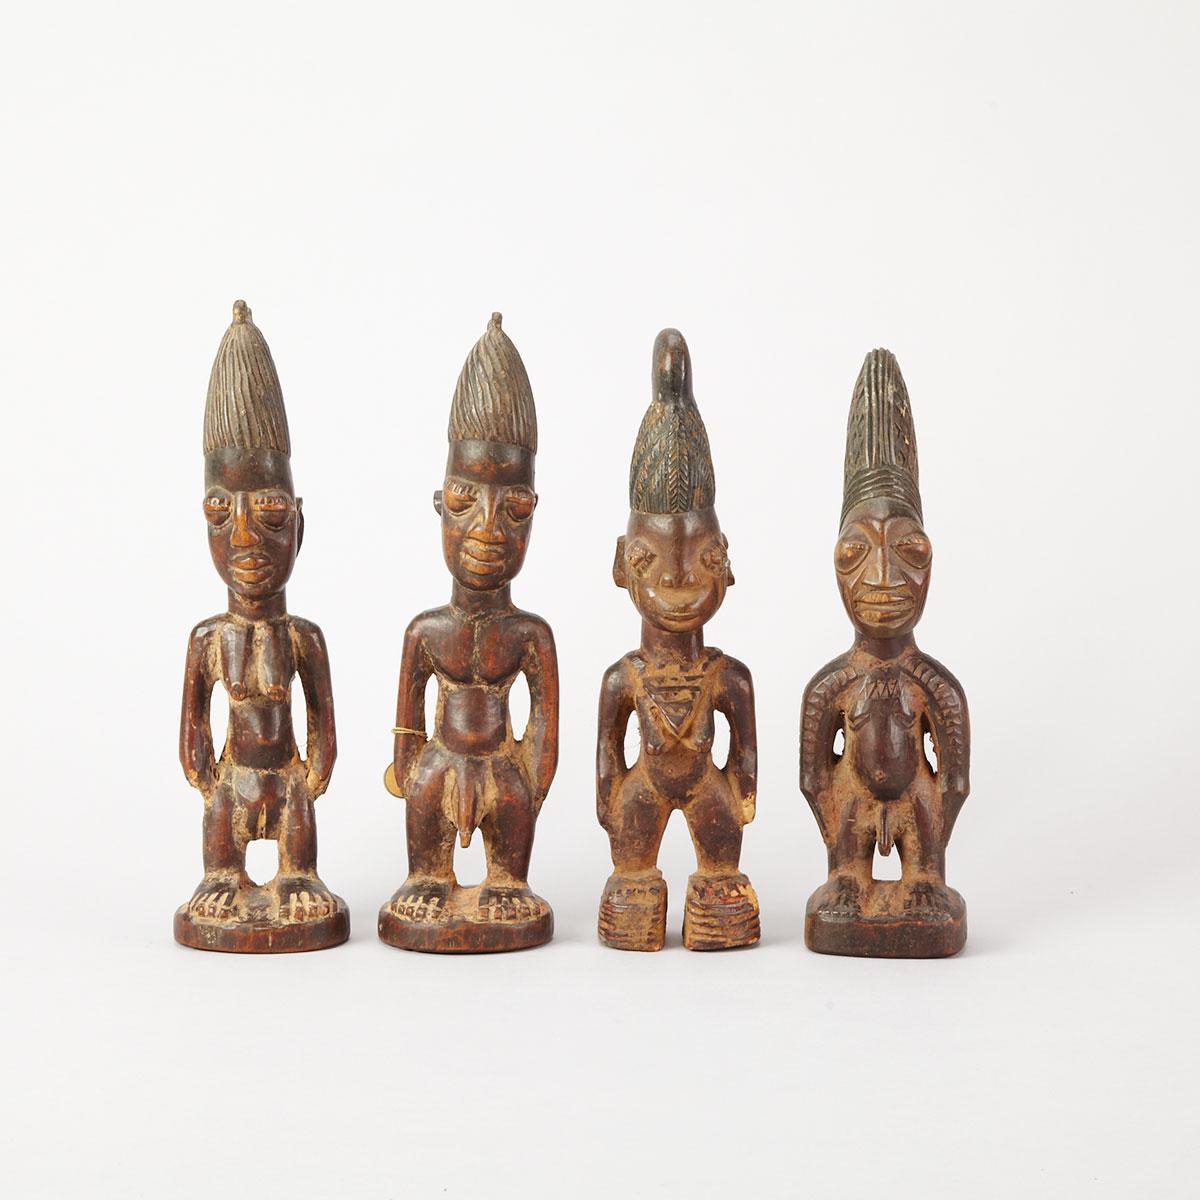 Two Pairs of Yoruba Figures, Nigeria 